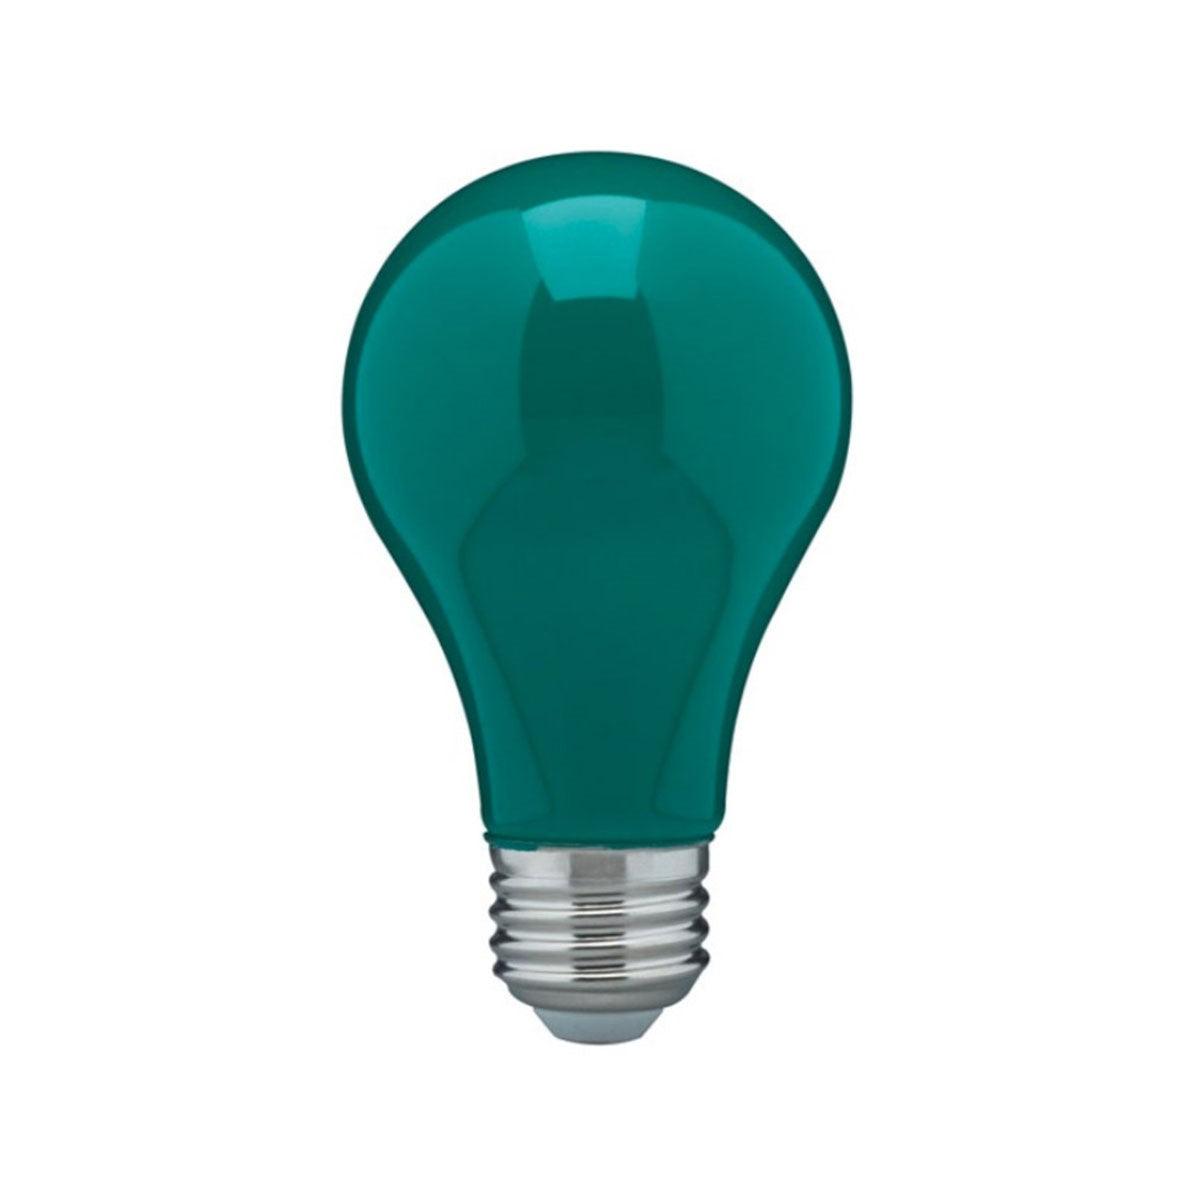 A19 LED Bulb, 100W Equivalent, 8 Watt, Lumens, Green, E26 Medium Base, Green Finish